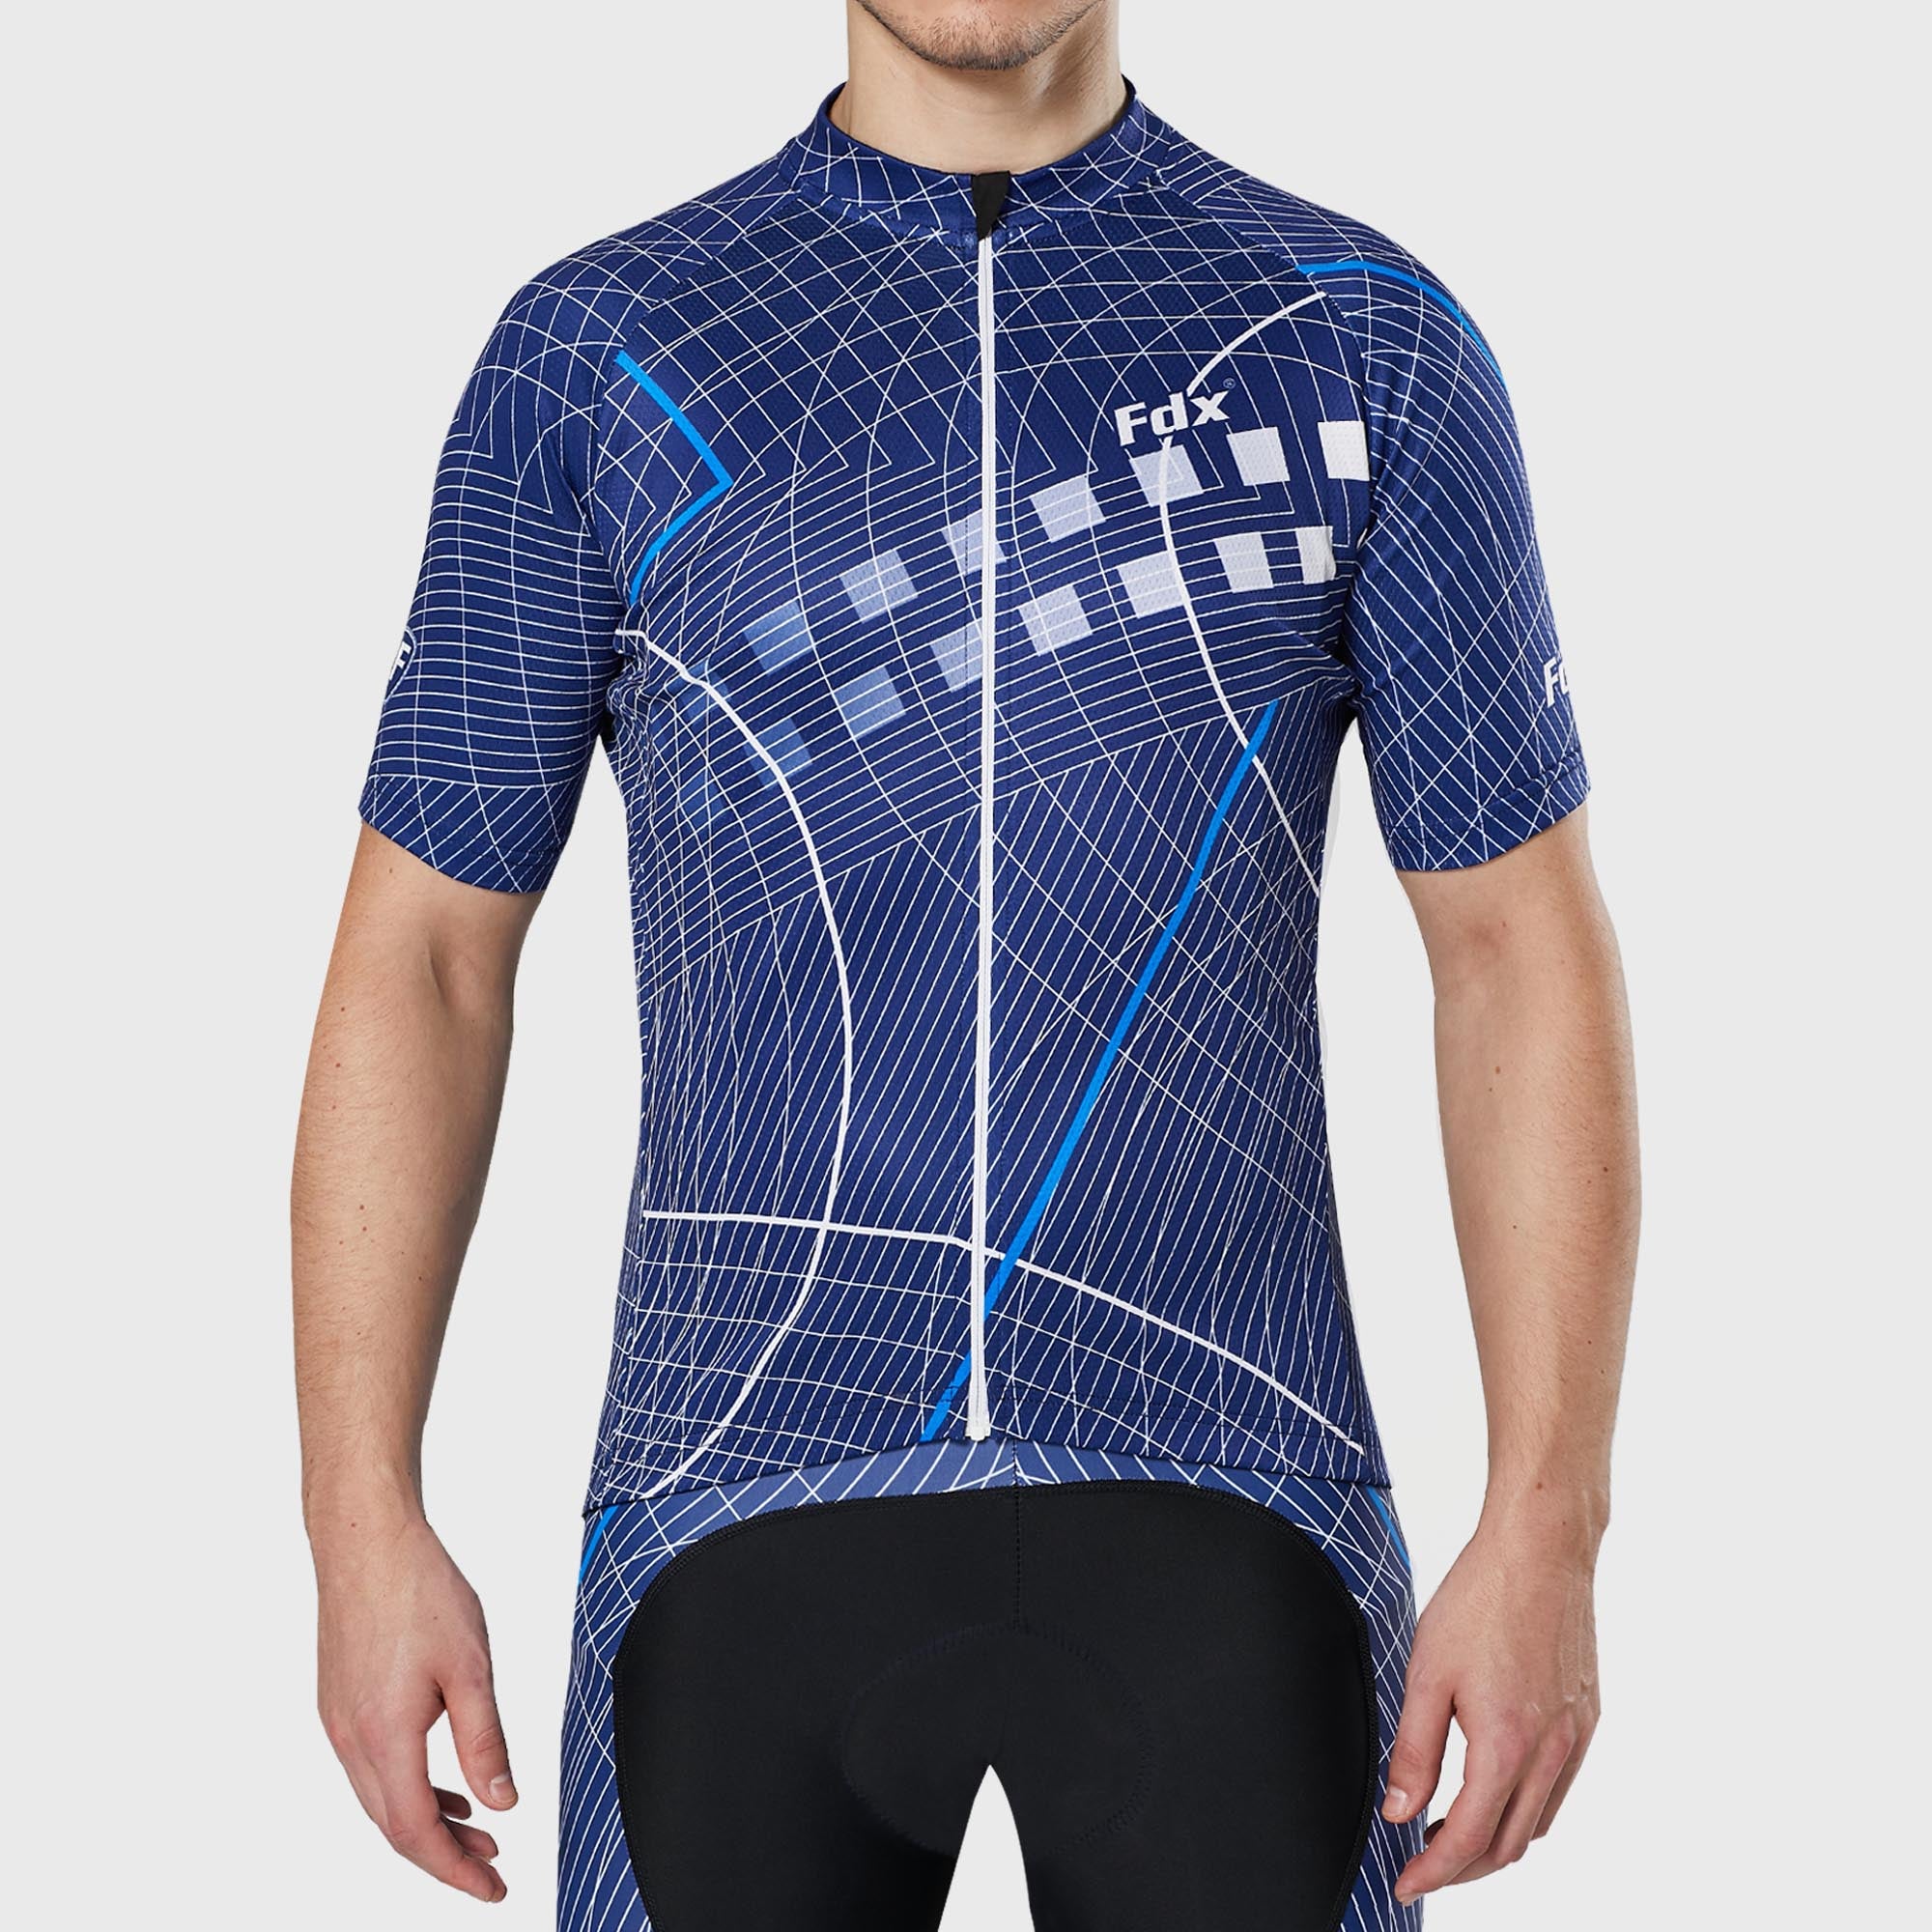 Fdx Mens Blue Short Sleeve Cycling Jersey for Summer Best Road Bike Wear Top Light Weight, Full Zipper, Pockets & Hi-viz Reflectors - Classic II